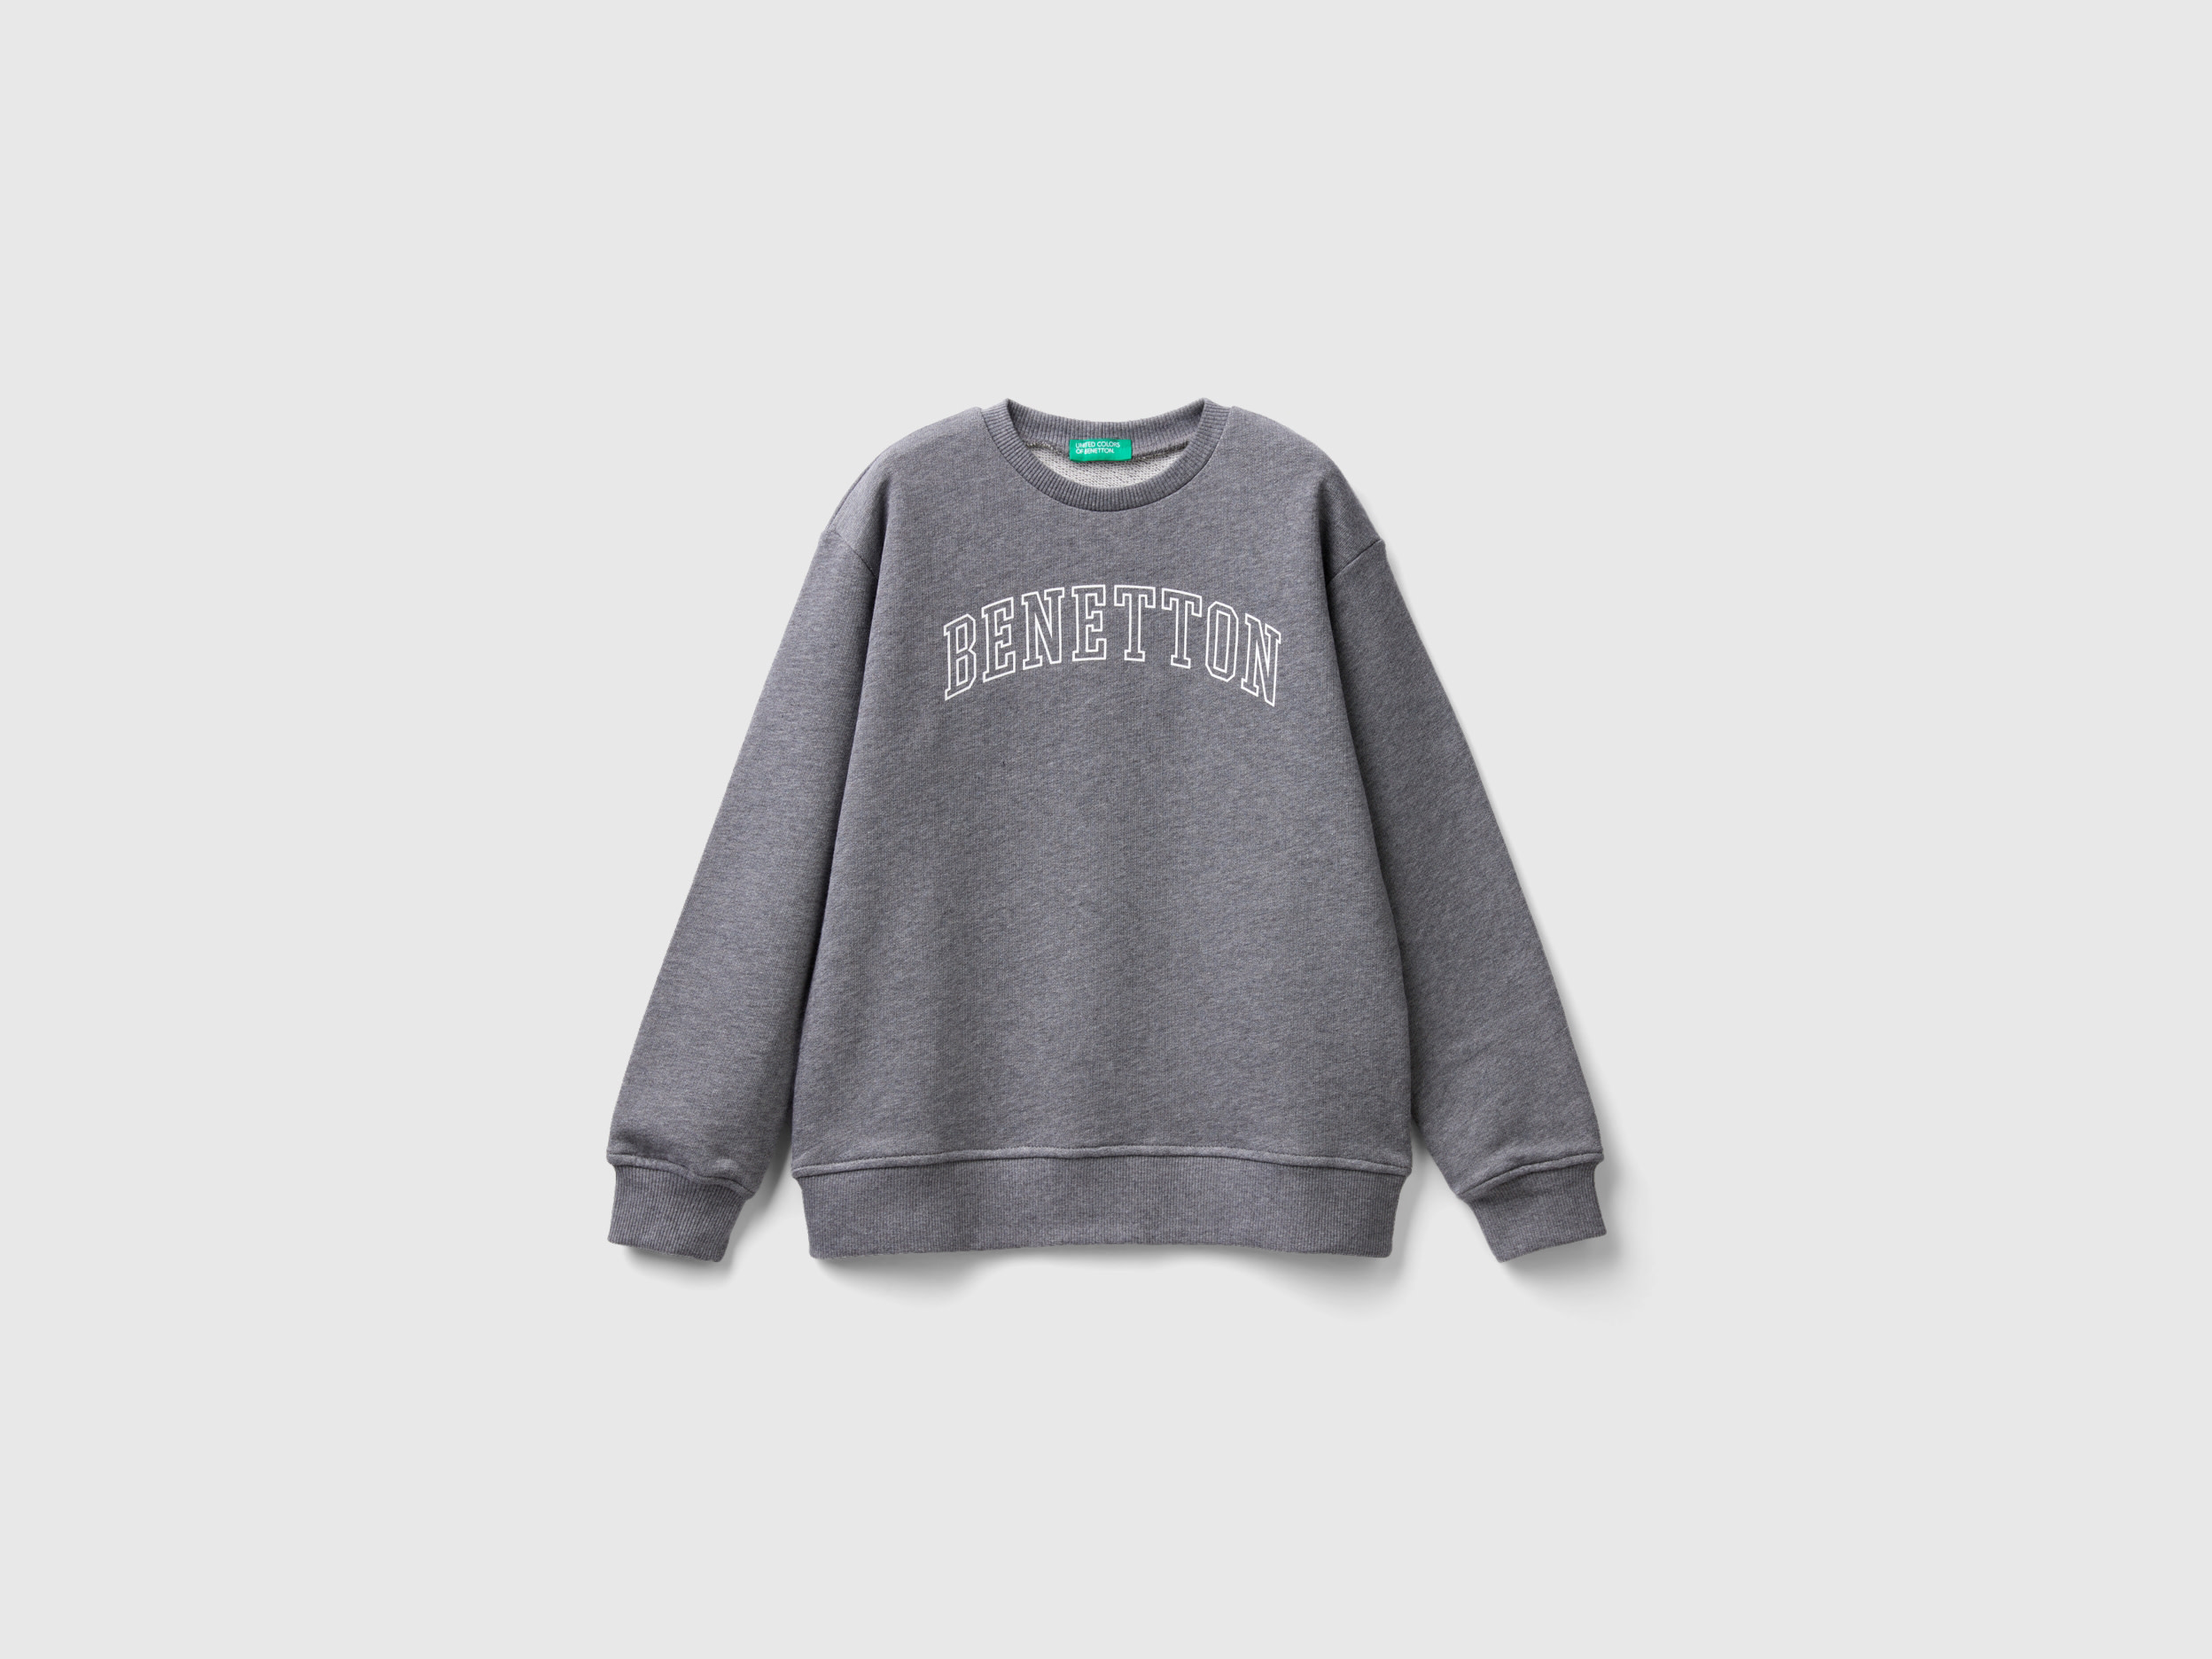 Benetton, Sweatshirt With Logo Print, size M, Dark Gray, Kids